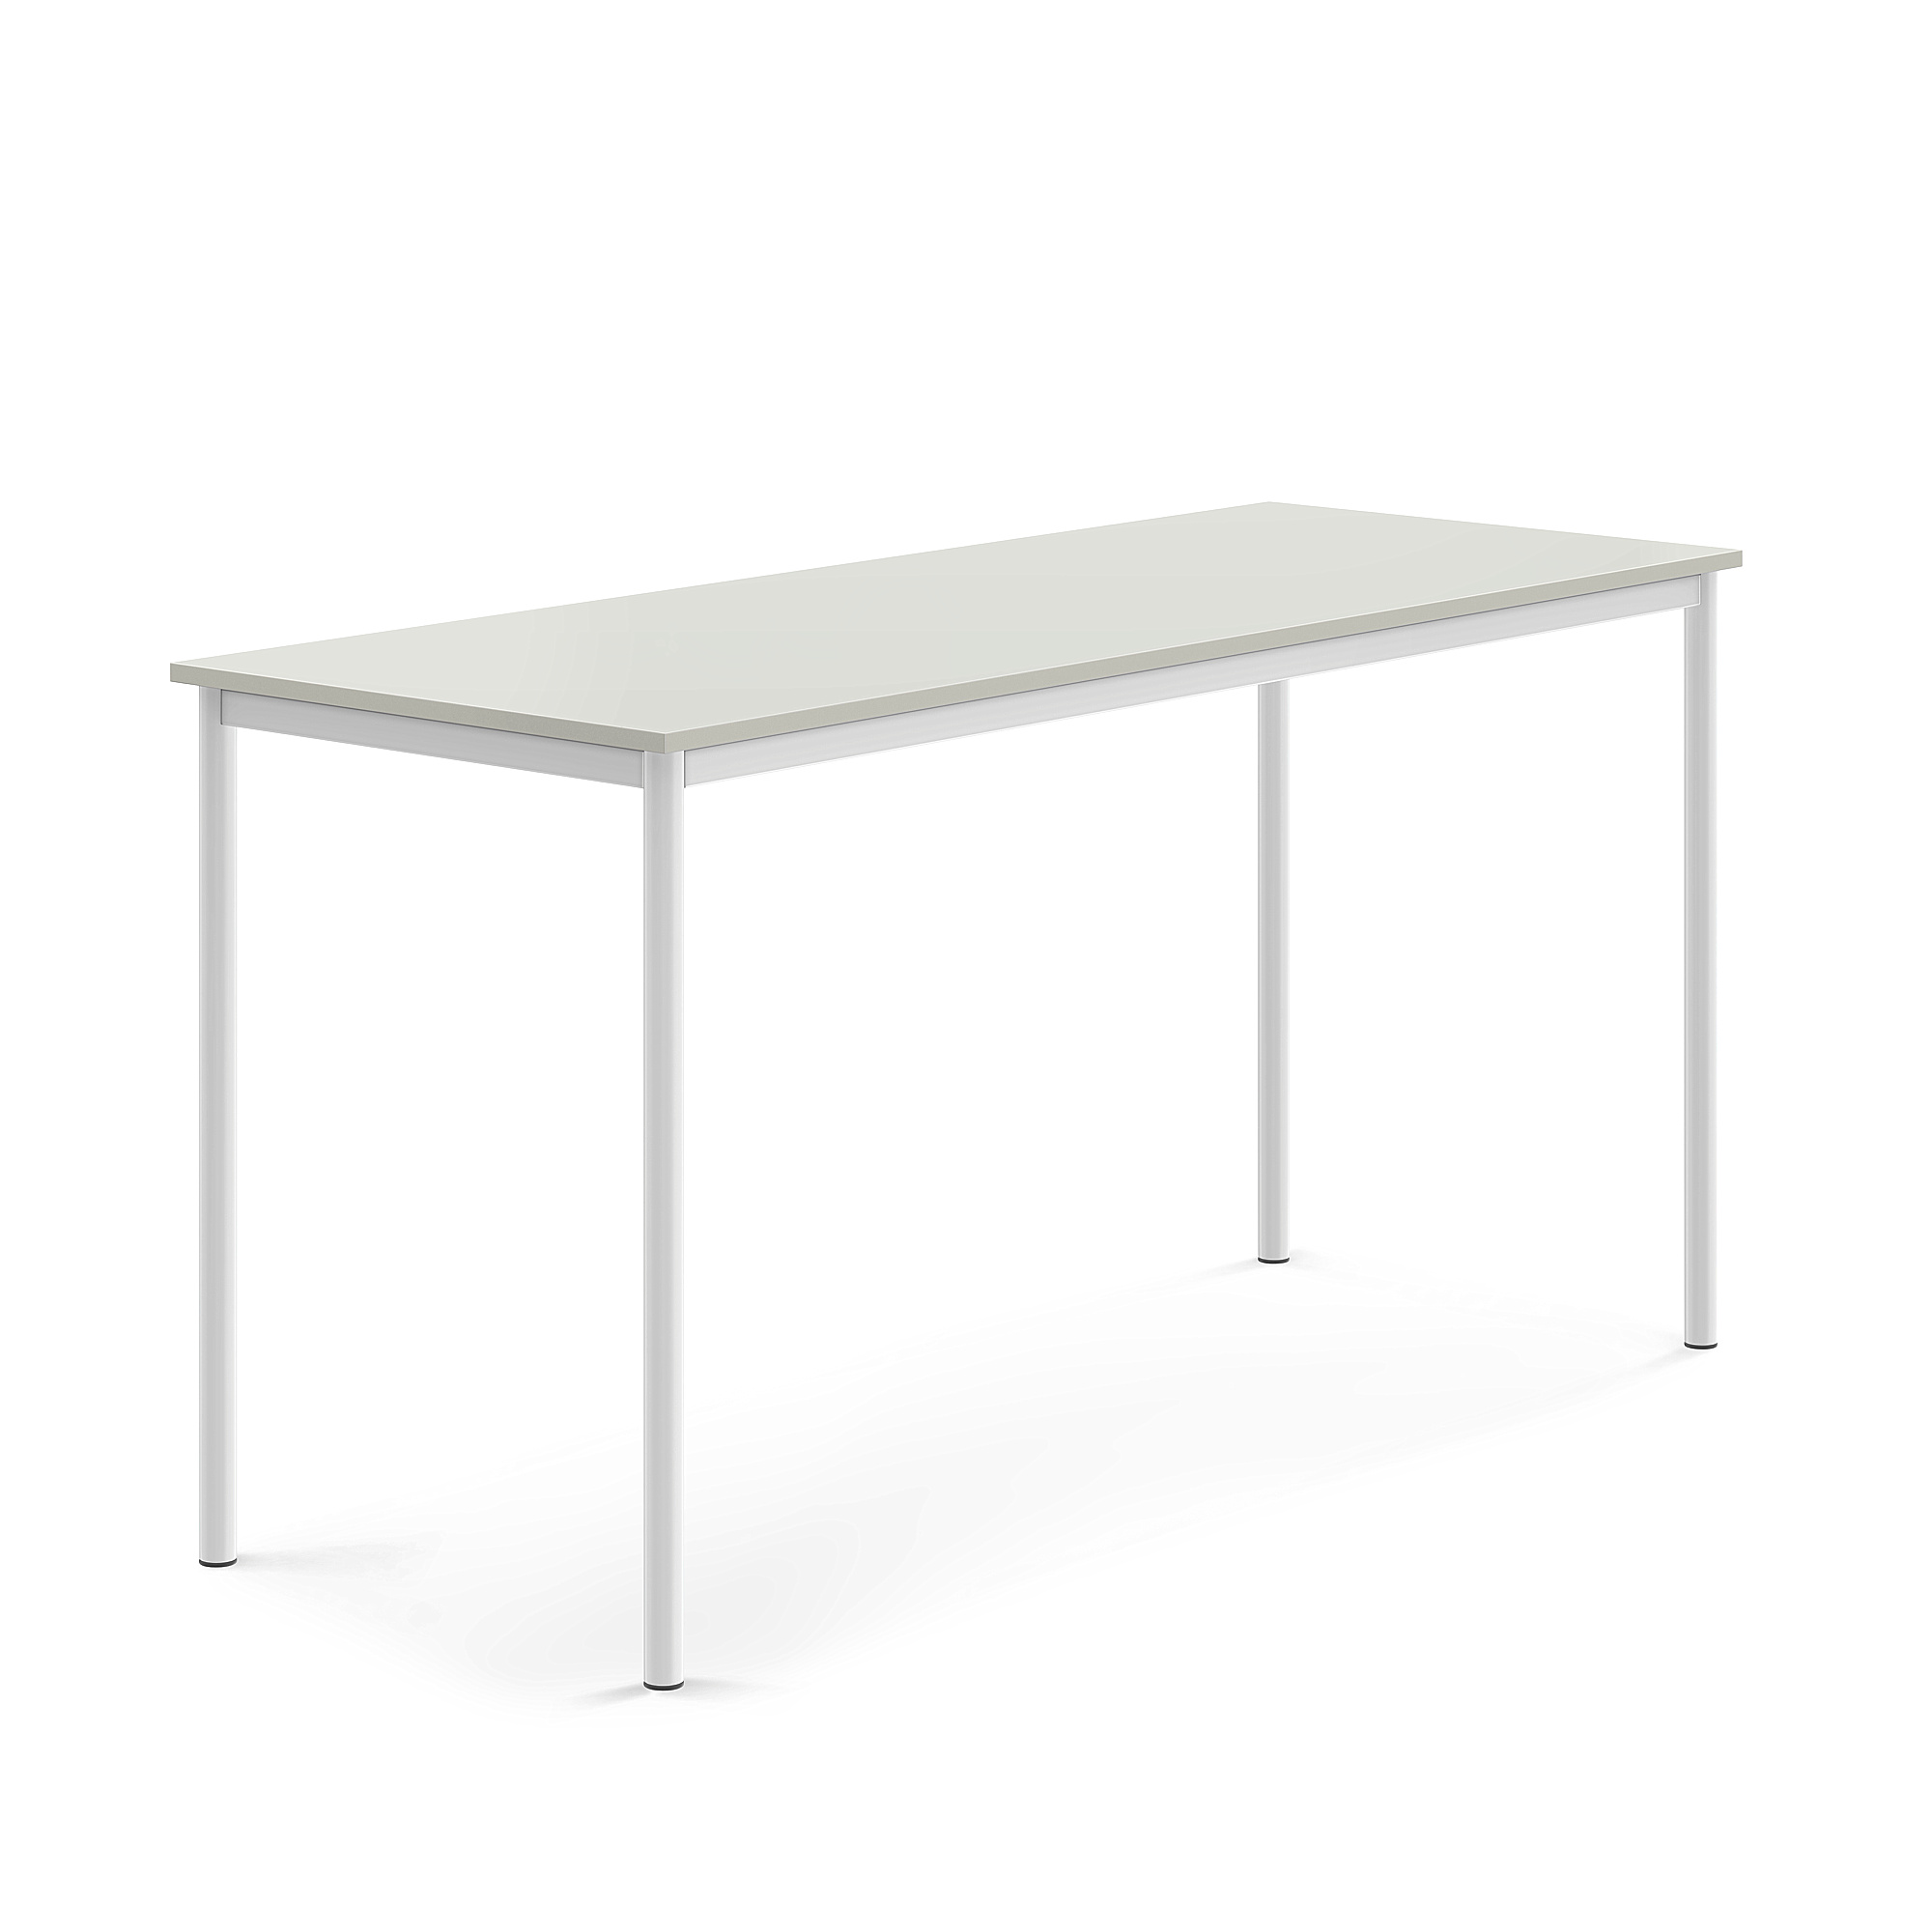 Stůl SONITUS, 1800x700x900 mm, bílé nohy, HPL deska tlumící hluk, šedá